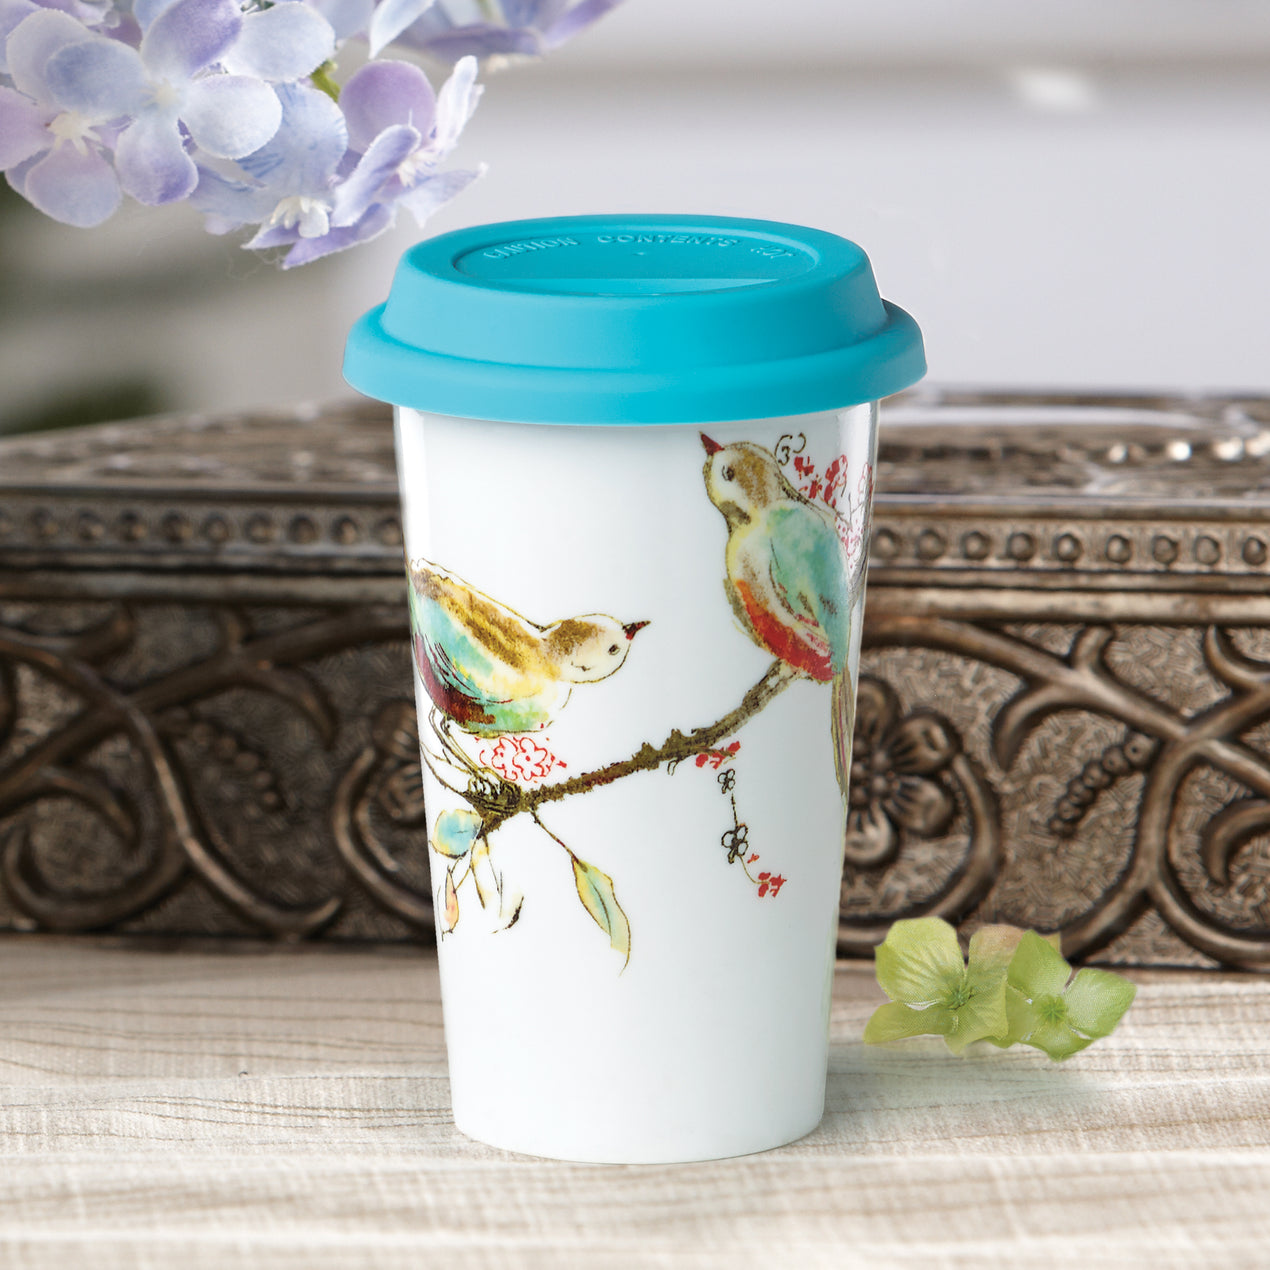 Ceramic Coffee Mug with Lid - Ceramic Travel Mug with Lid - Dishwasher Safe Mug - Ceramic Mug with Lid - Ceramic Travel Coffee Mug - Dishwasher Safe